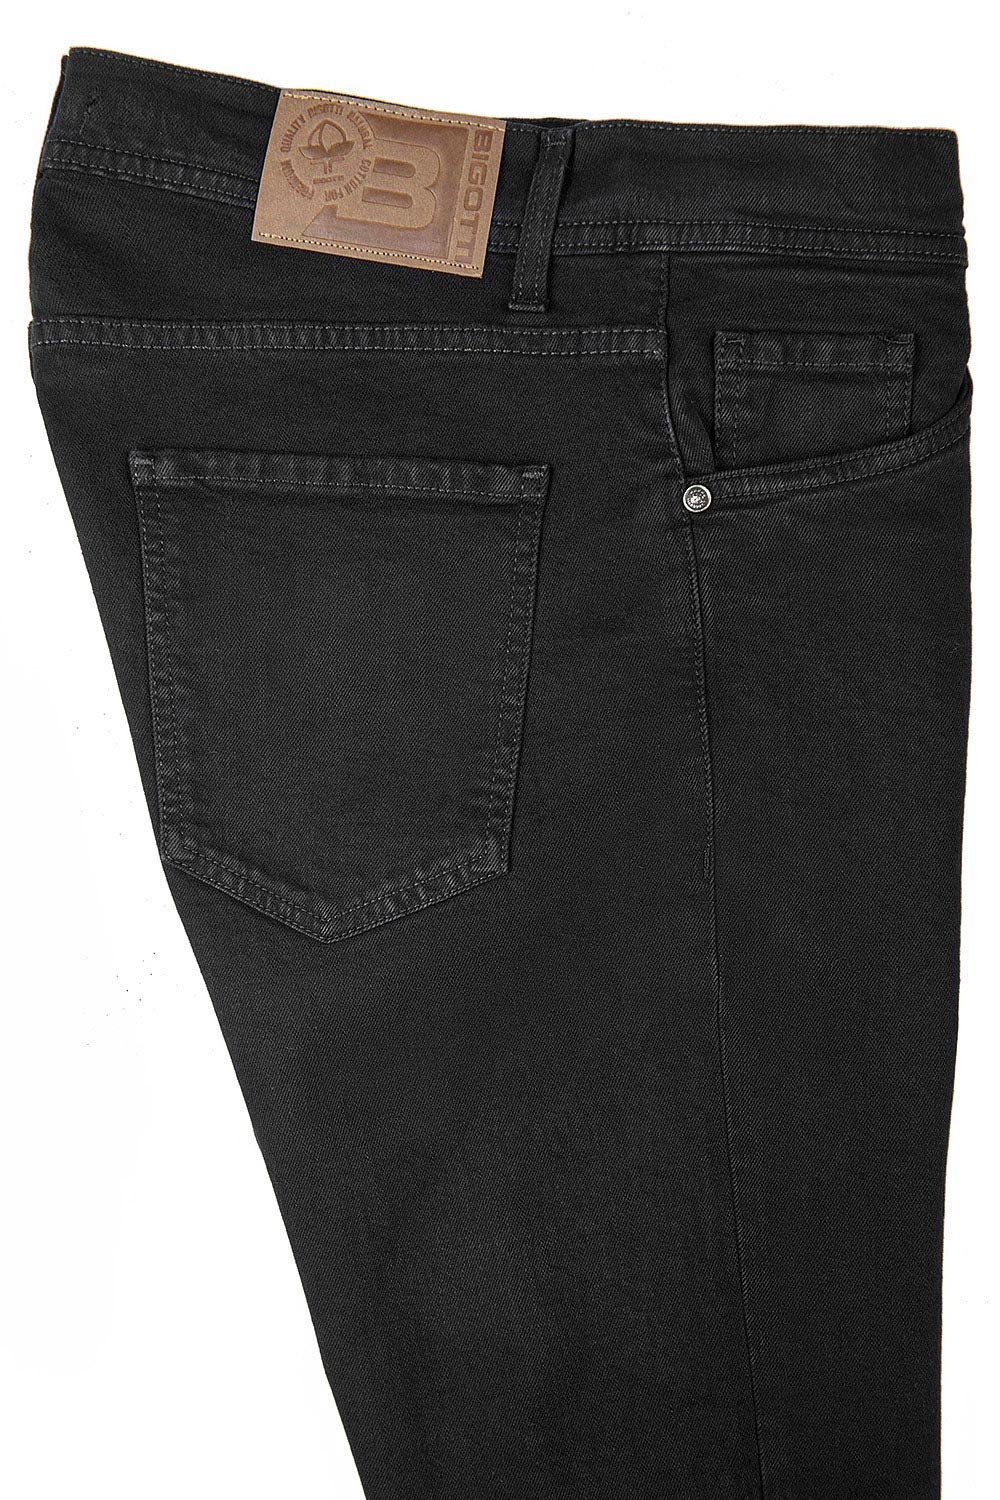 Black jeans 2